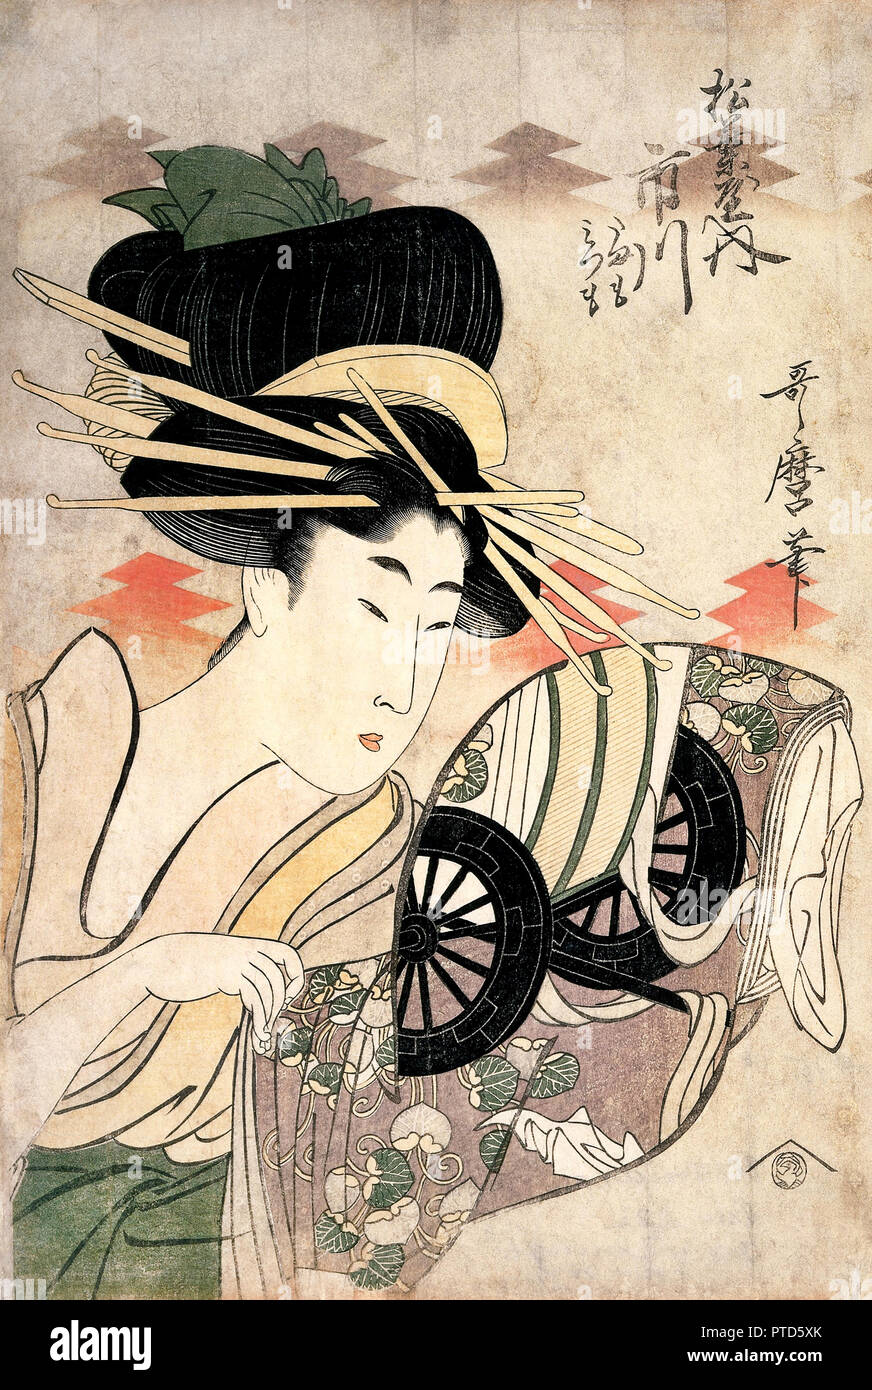 Kitagawa Utamaro, la courtisane de l'établissement Ichikawa Matsuba, vers 1796-1799, estampes sur papier, Cincinnati Art Museum, USA. Banque D'Images